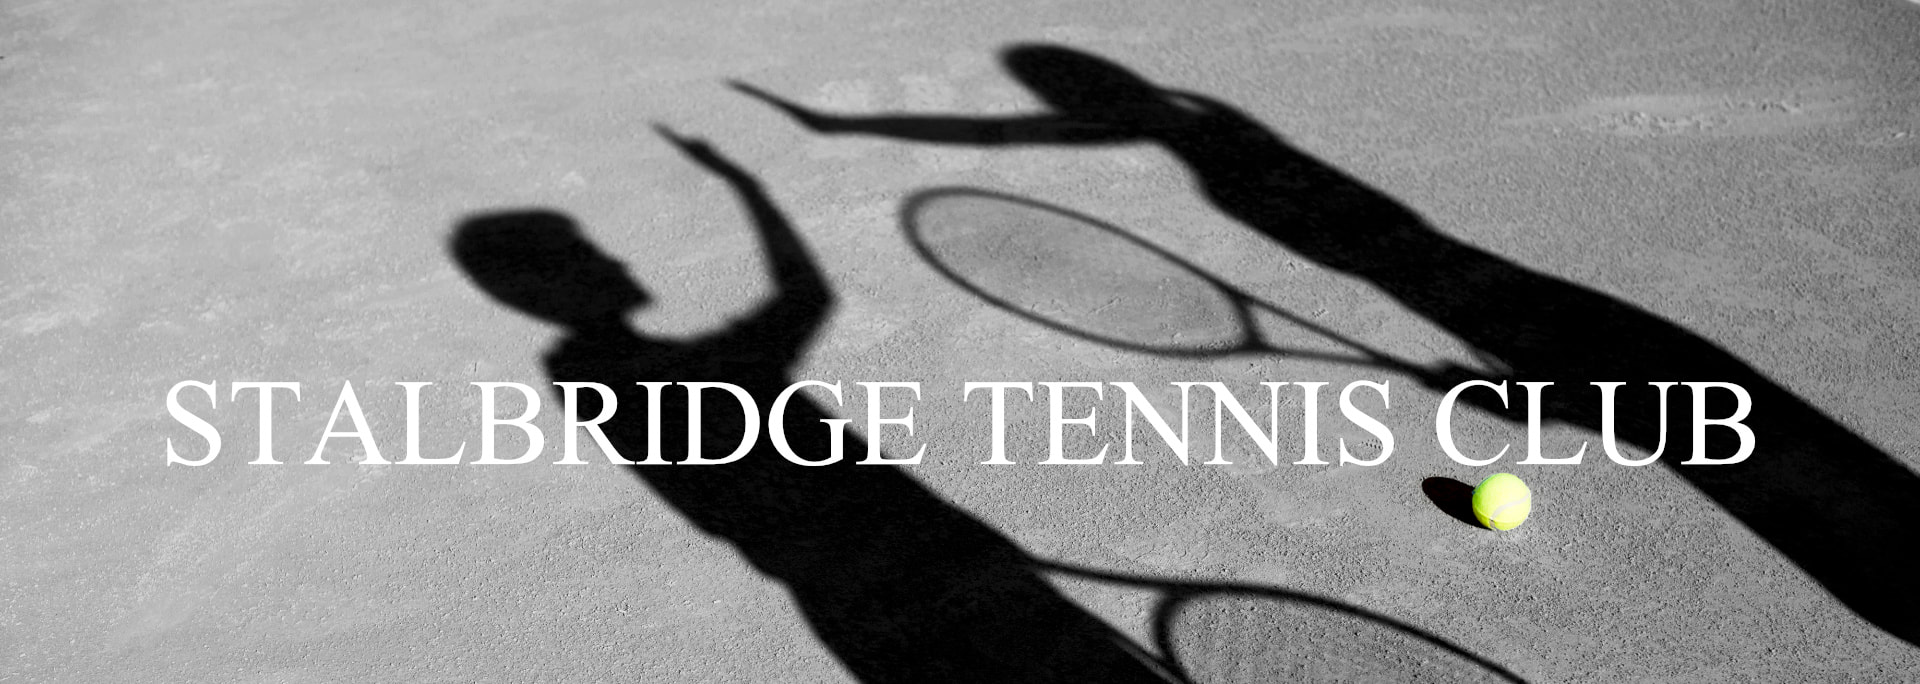 STALBRIDGE TENNIS CLUB